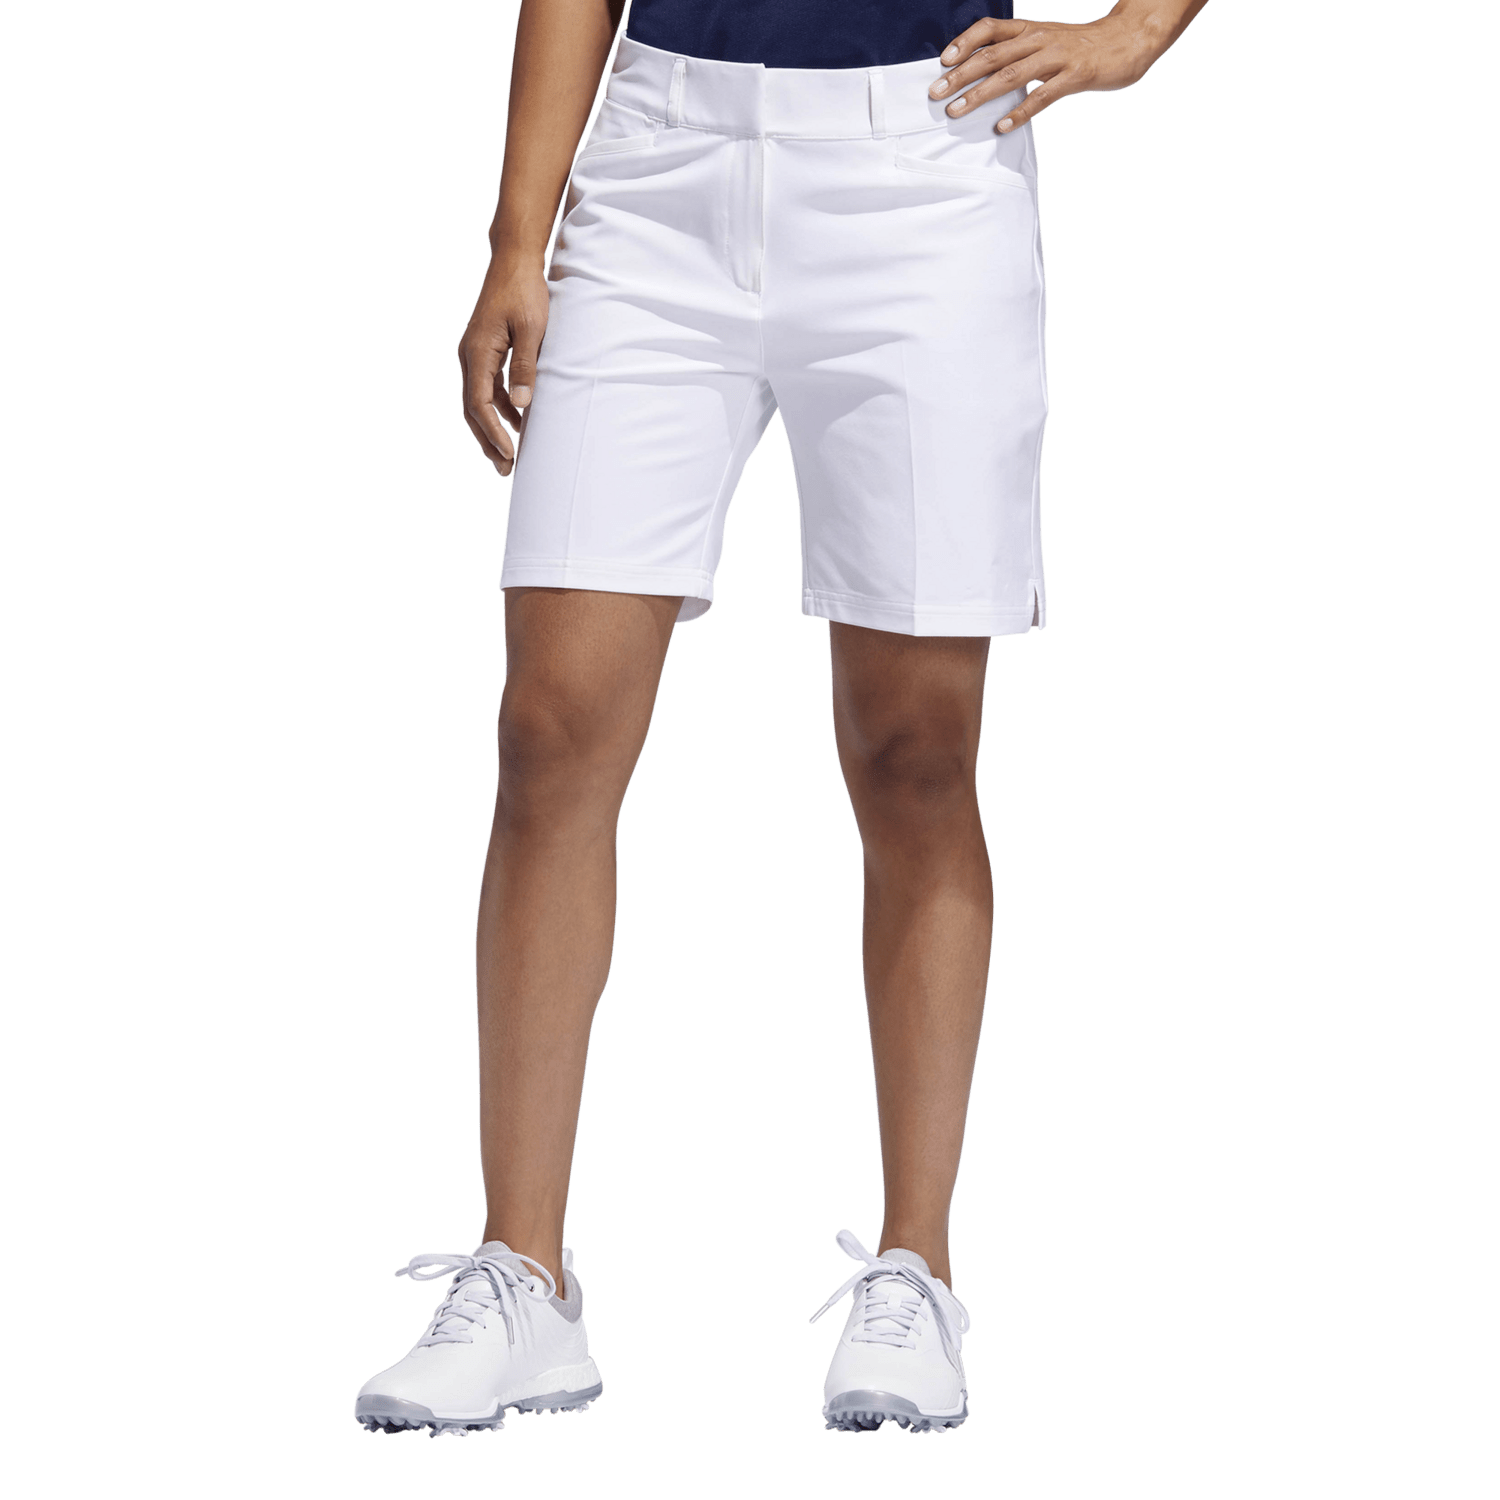 adidas women's ultimate club 7 golf shorts